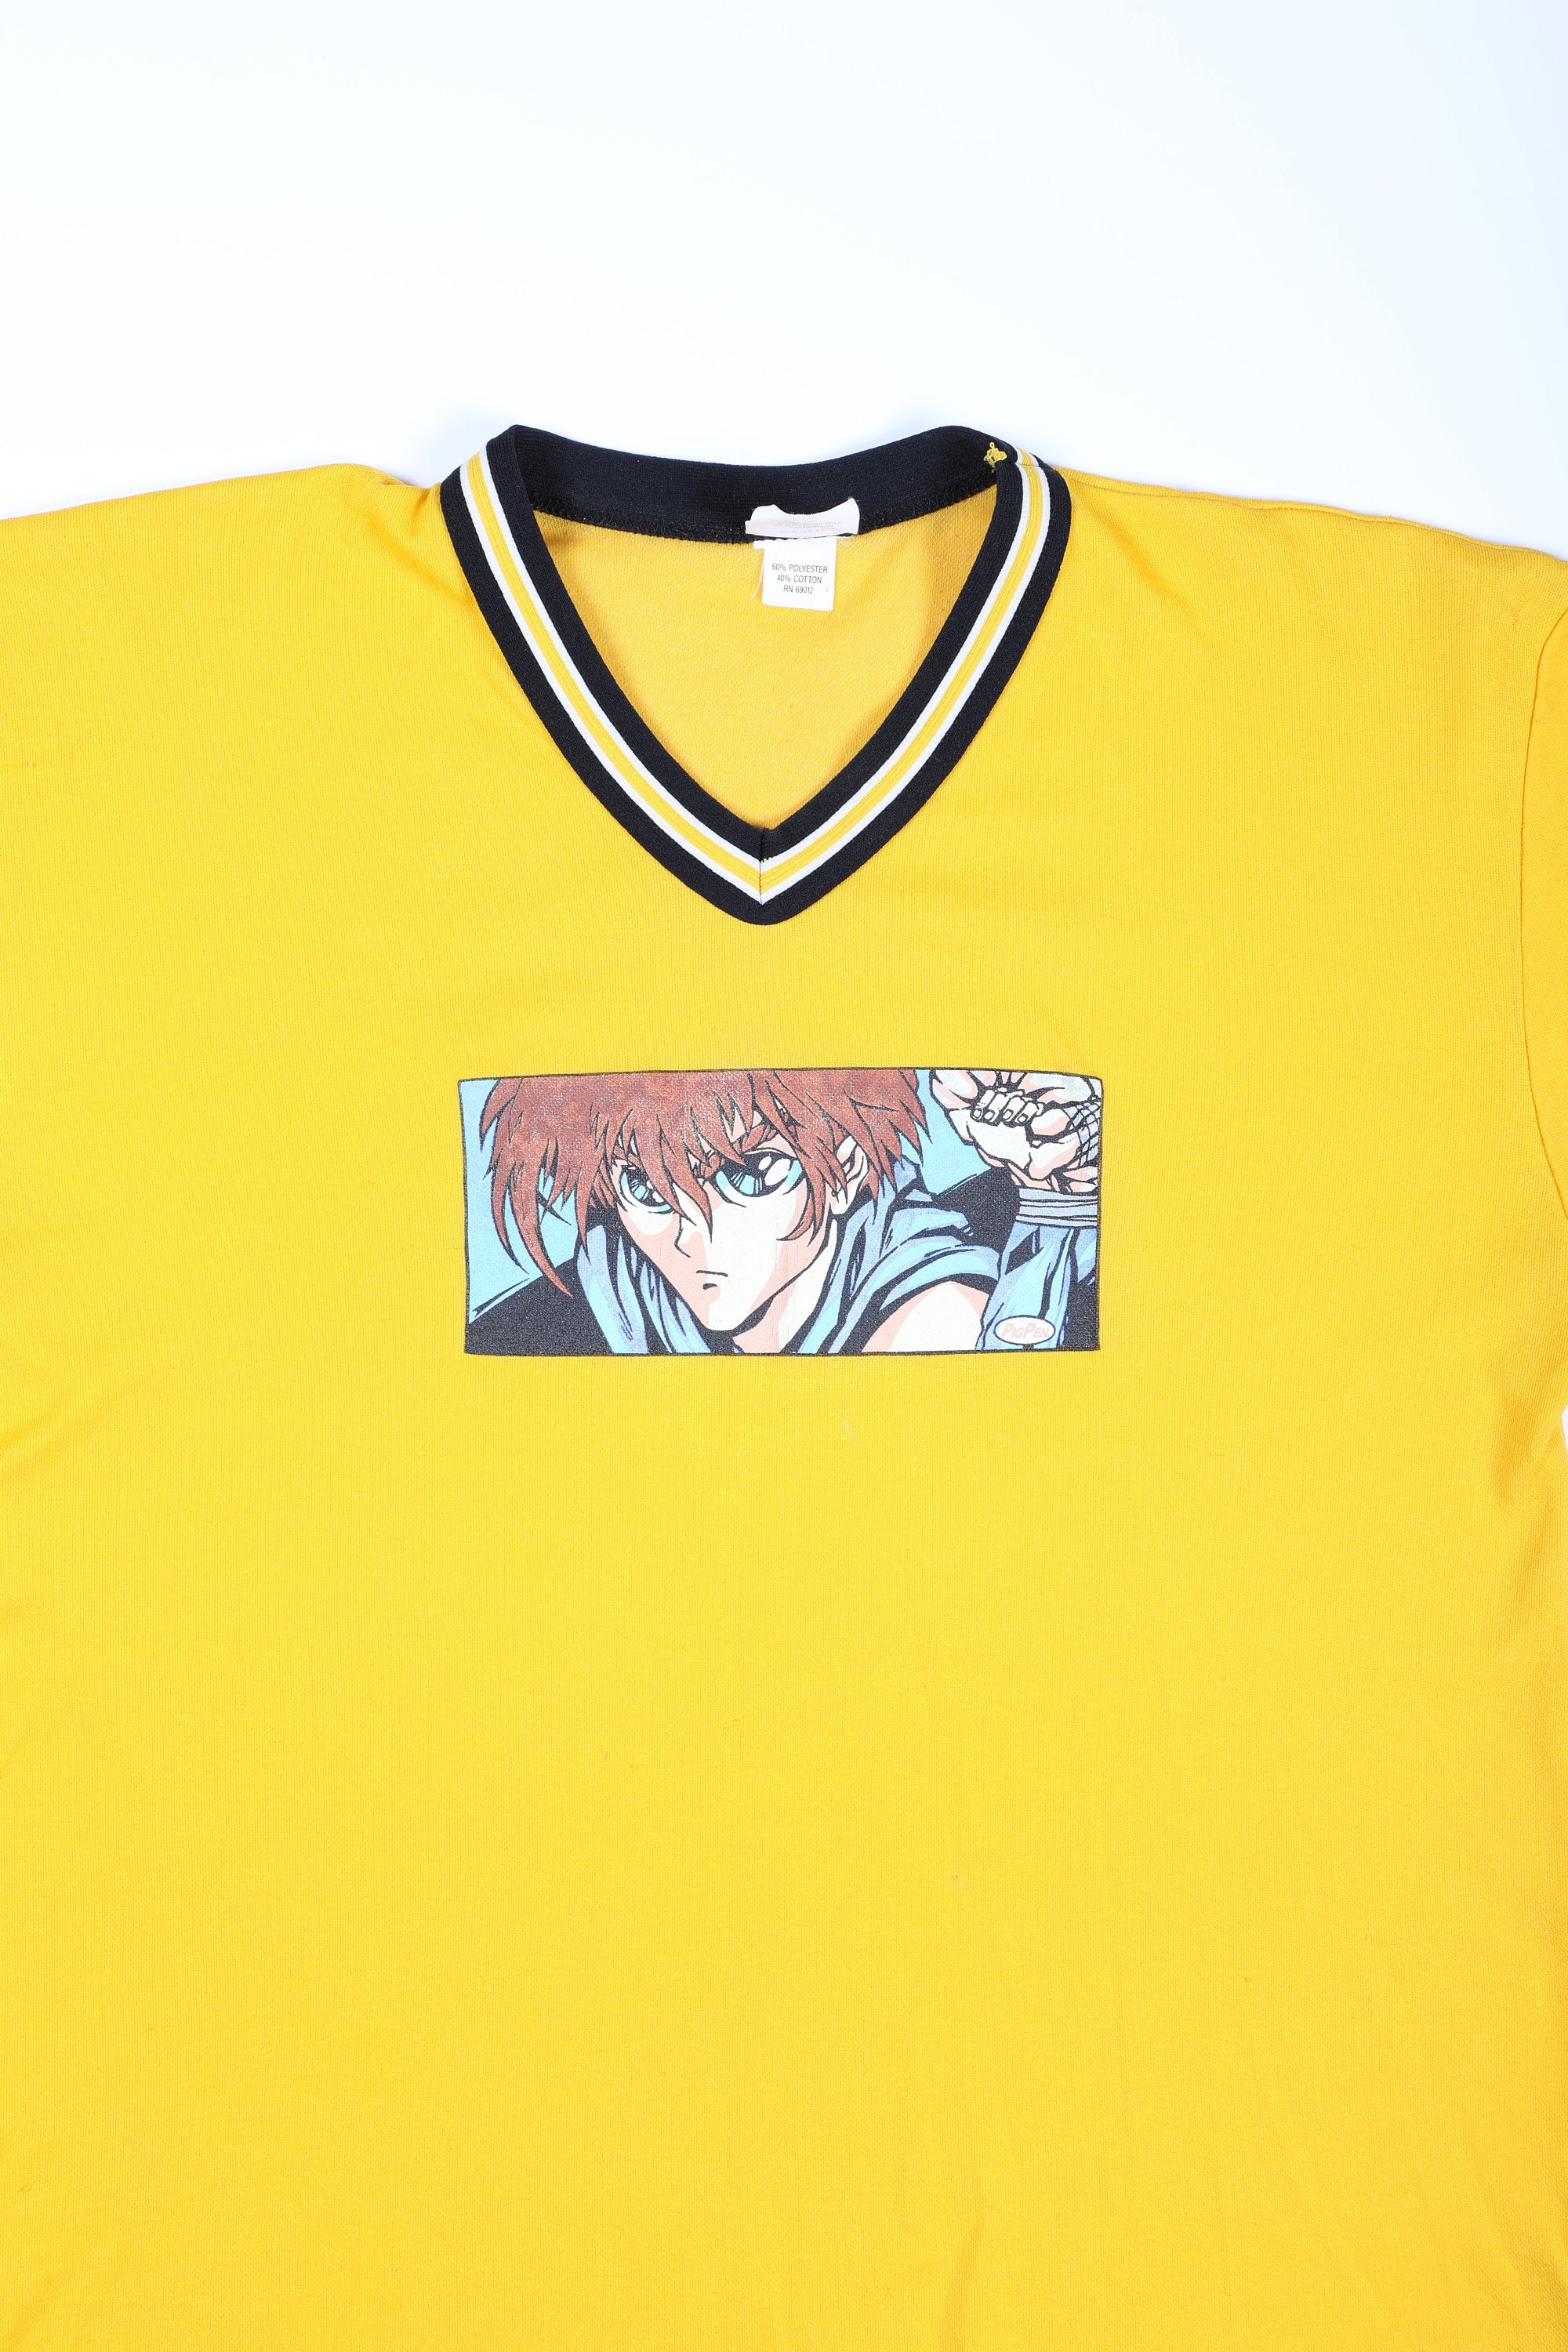 Mcjesus hockey T-Shirt customized t shirts anime clothes oversized t shirt  mens vintage t shirts - AliExpress